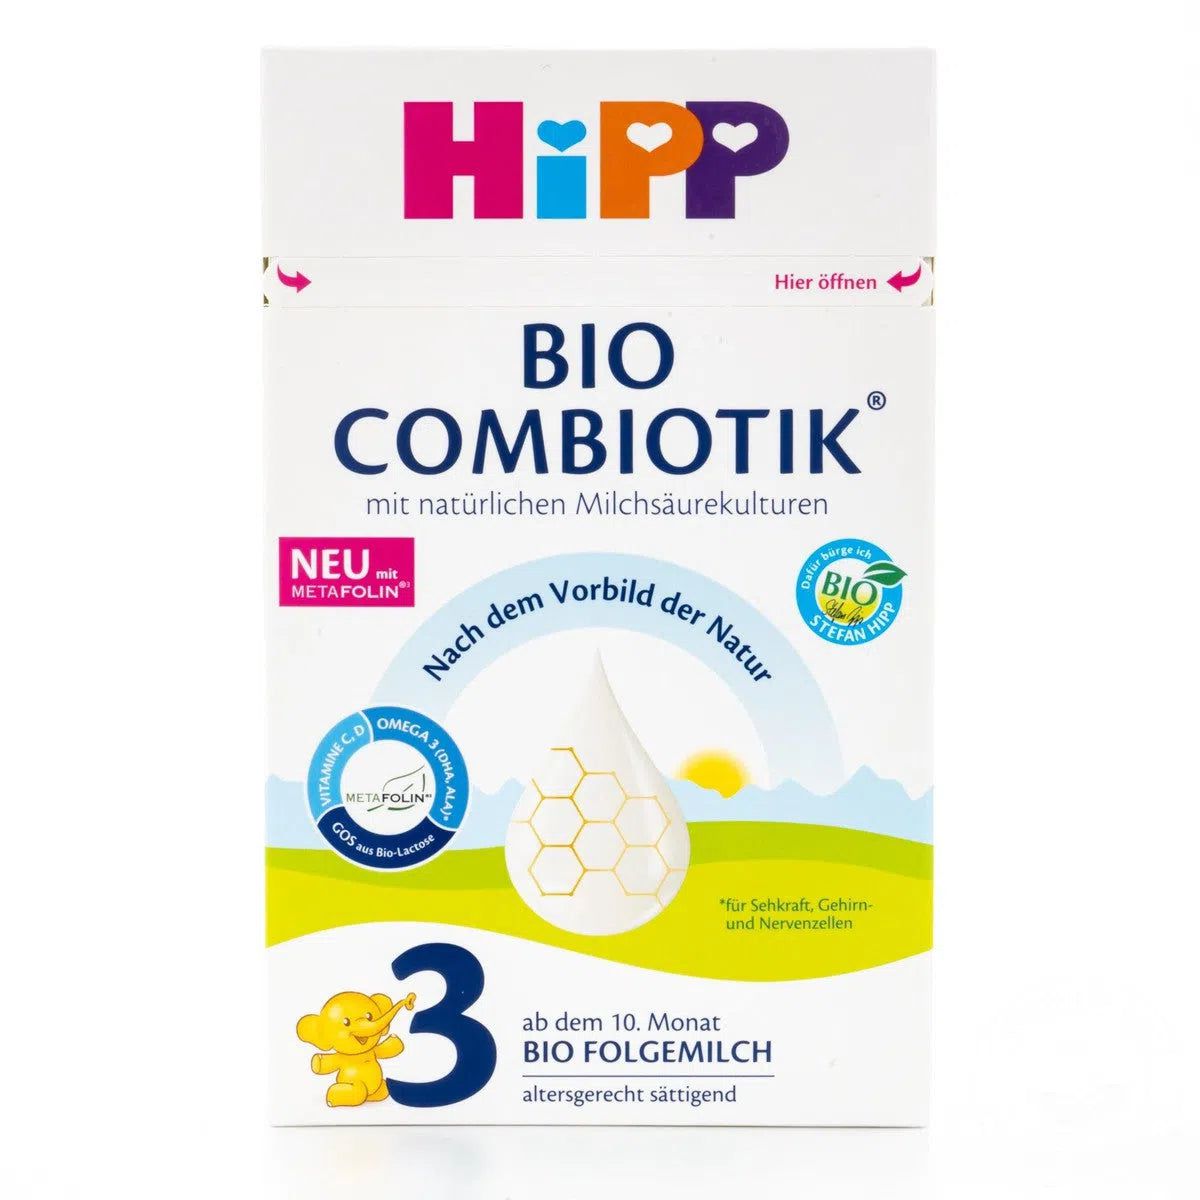 HiPP Stage 3 Combiotic Formula - German Version (600g) - 24 Boxes